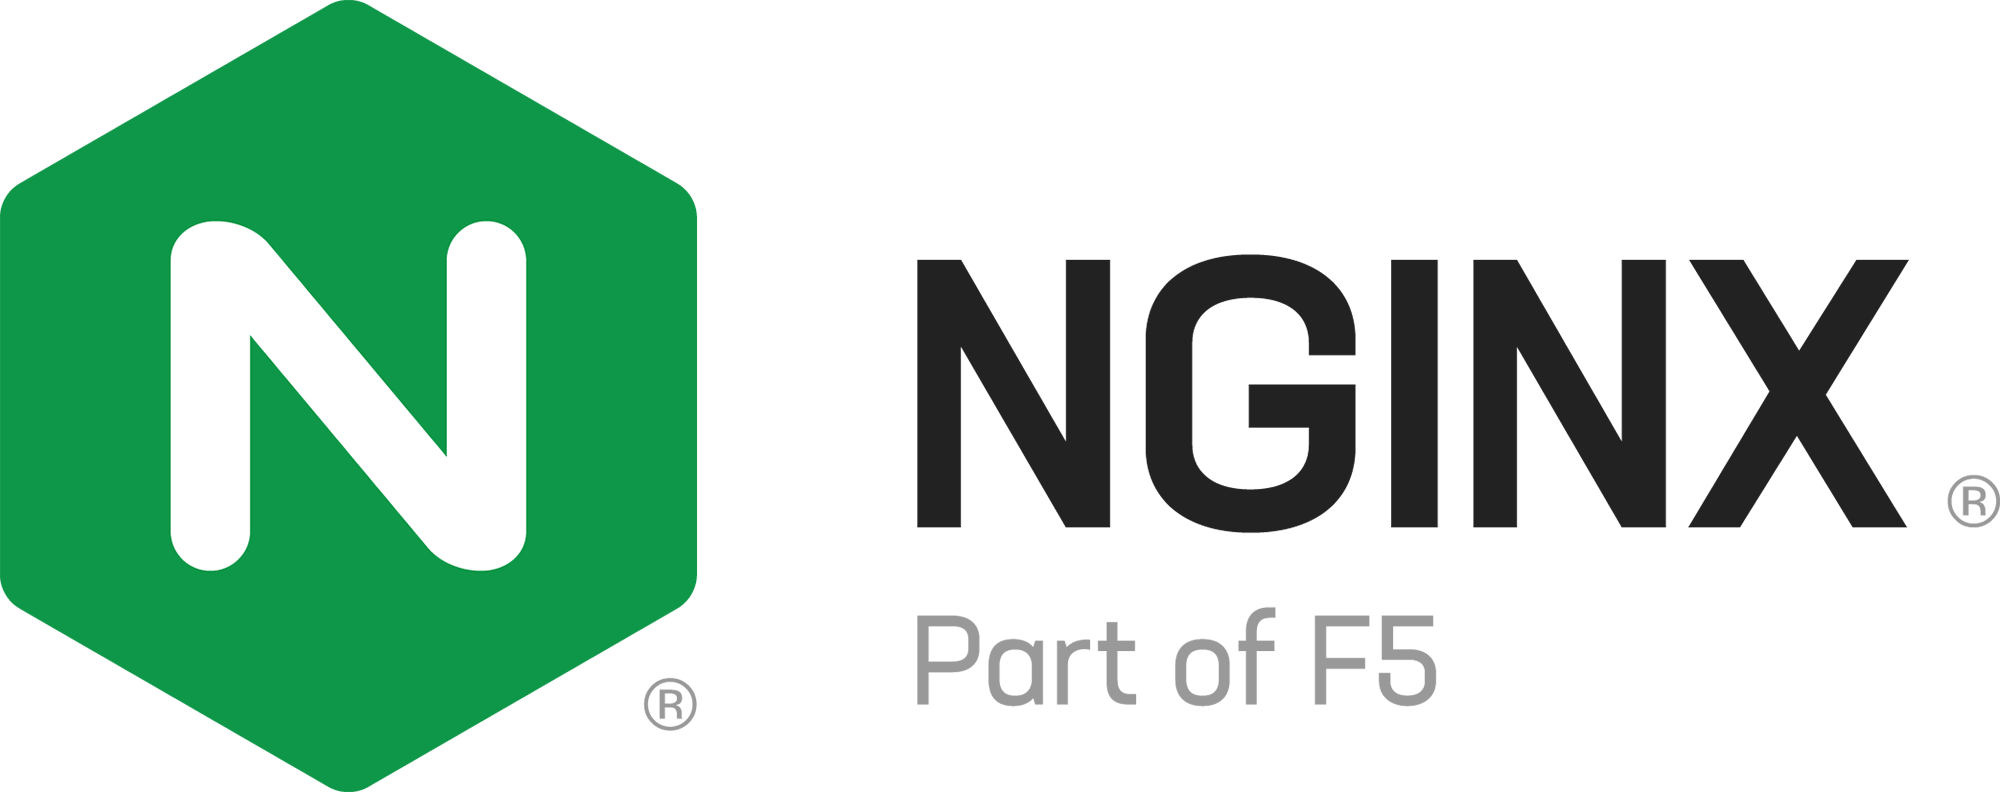 NGINX Logo Black Endorsement RGB